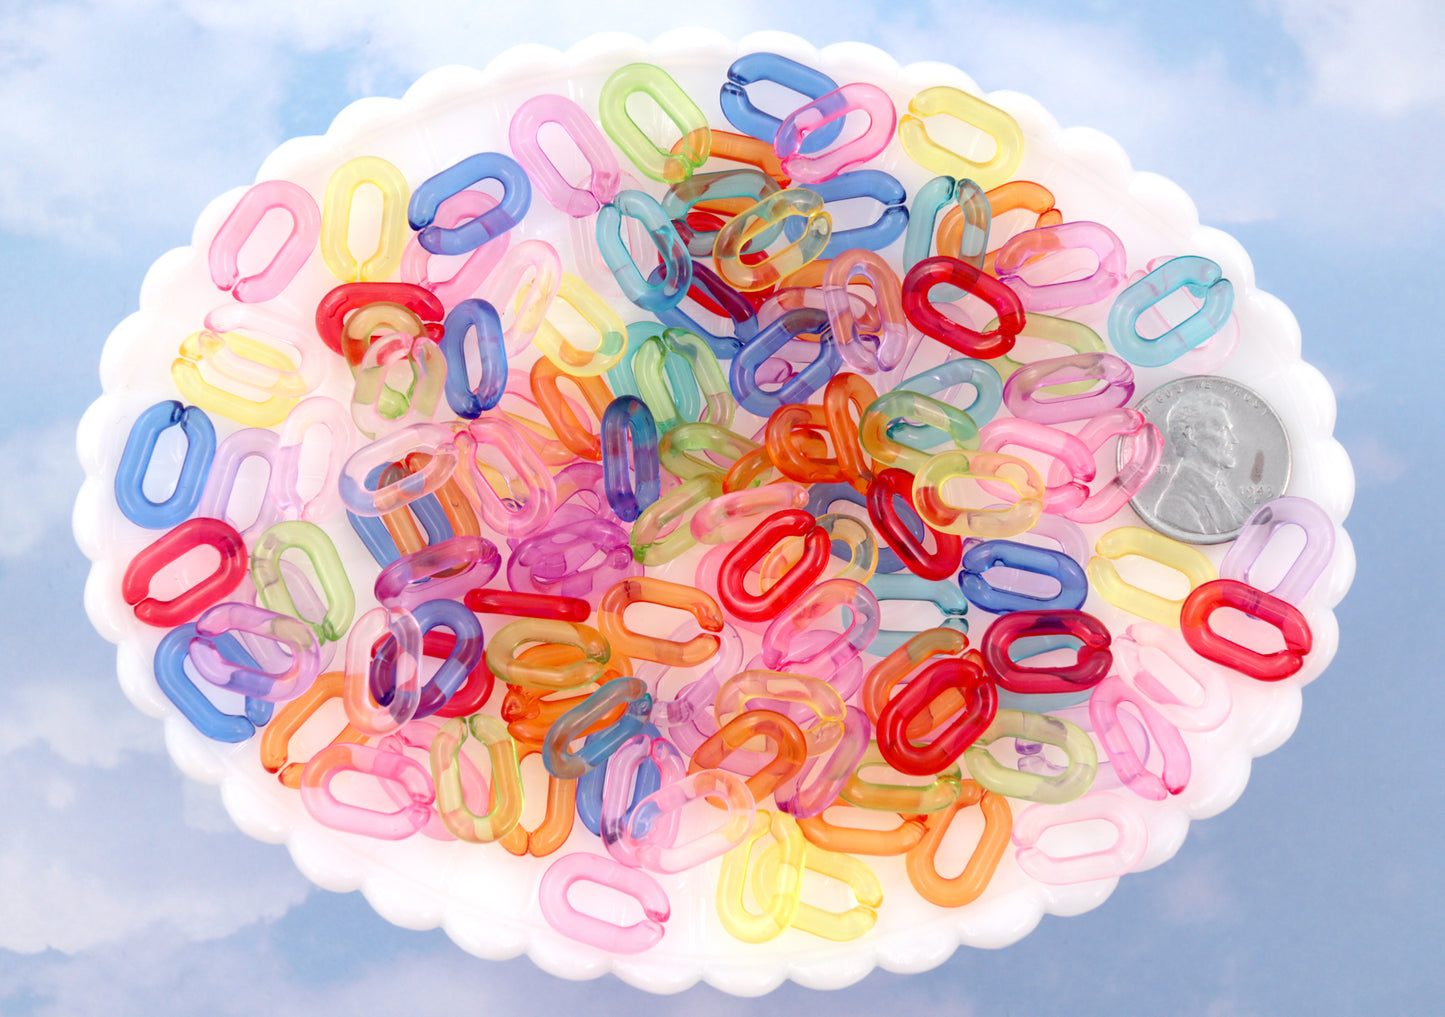 Plastic Chain Links - 15mm Transparent Colorful Plastic or Acrylic Chain Links - Mixed Colors - 200 pc set